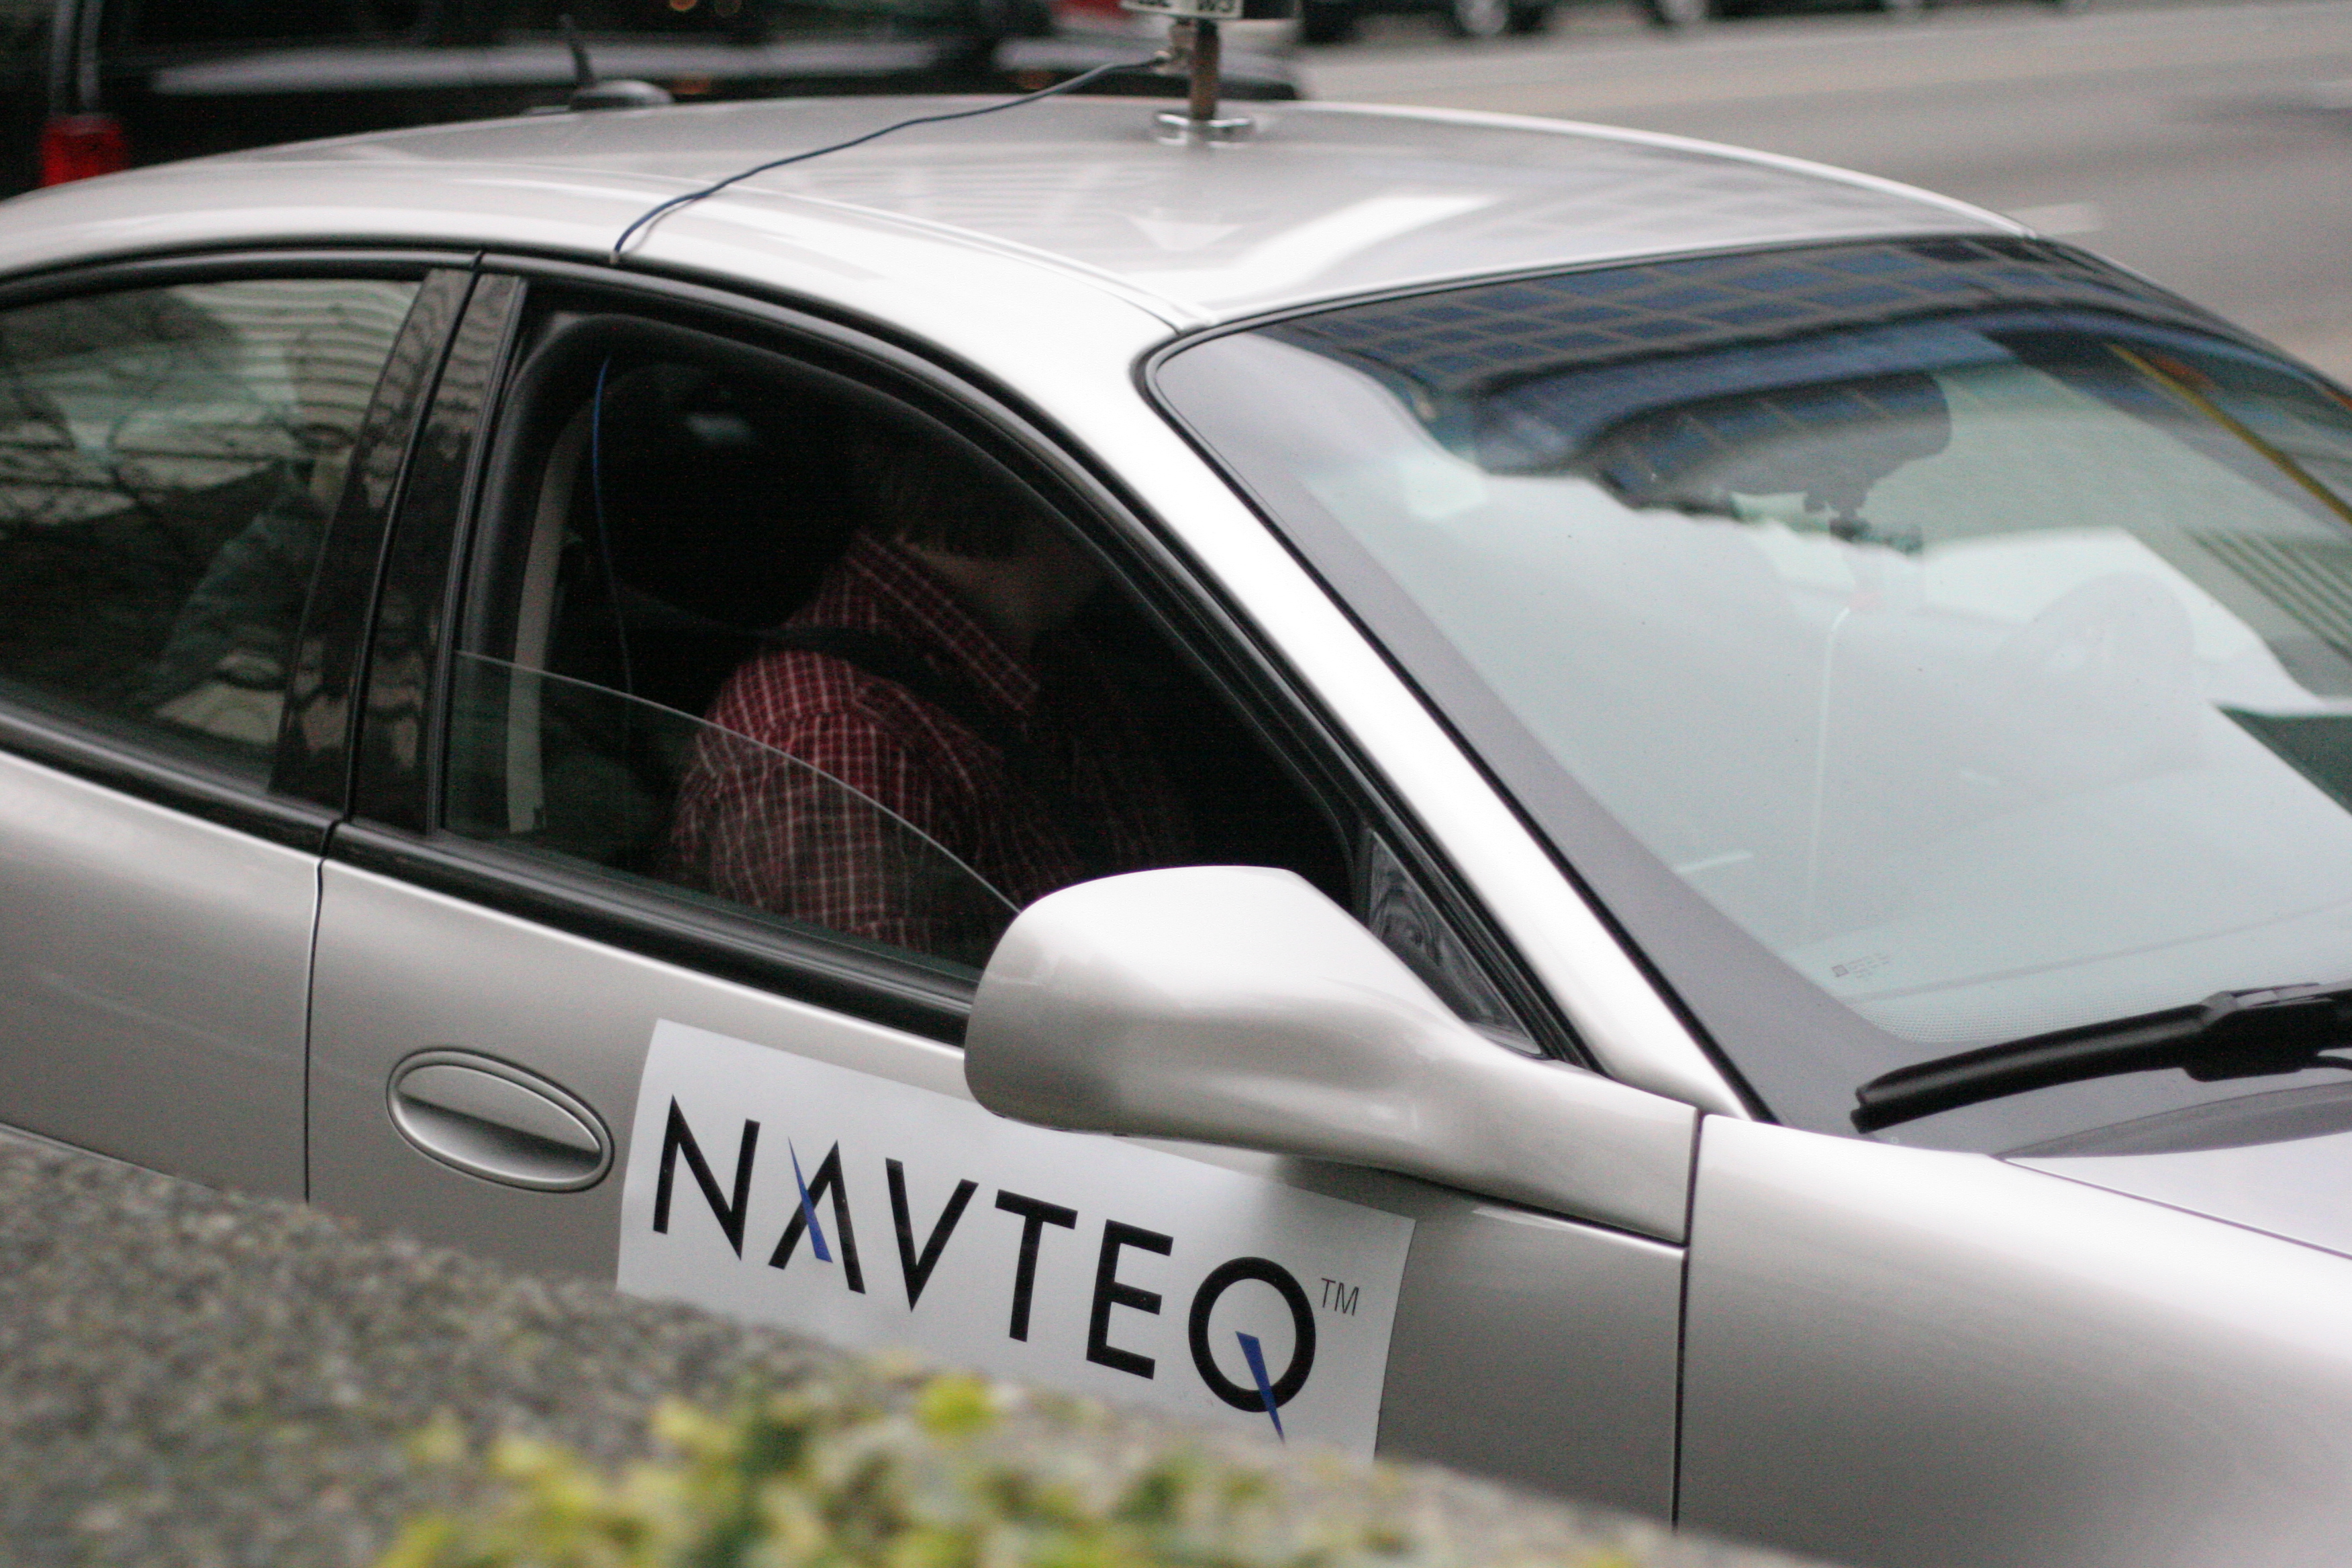 Navteq drive and ride - 7 photo